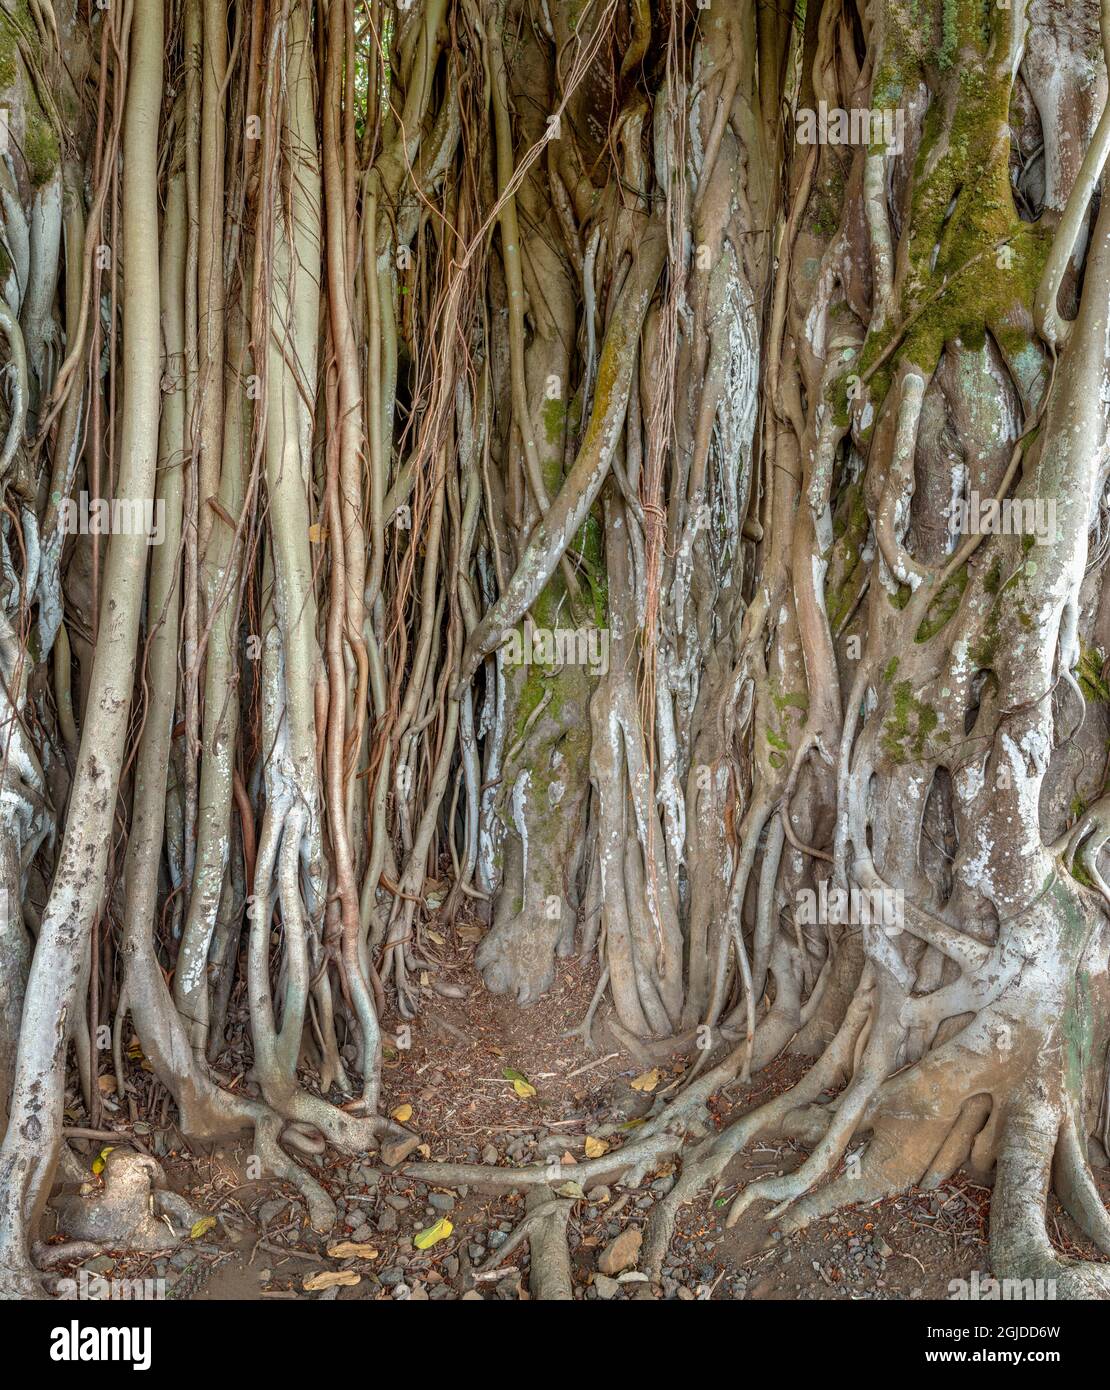 USA, Hawaii, Big Island of Hawaii. Hilo, Kalakaua Park, Banyan albero con più tronchi. Foto Stock